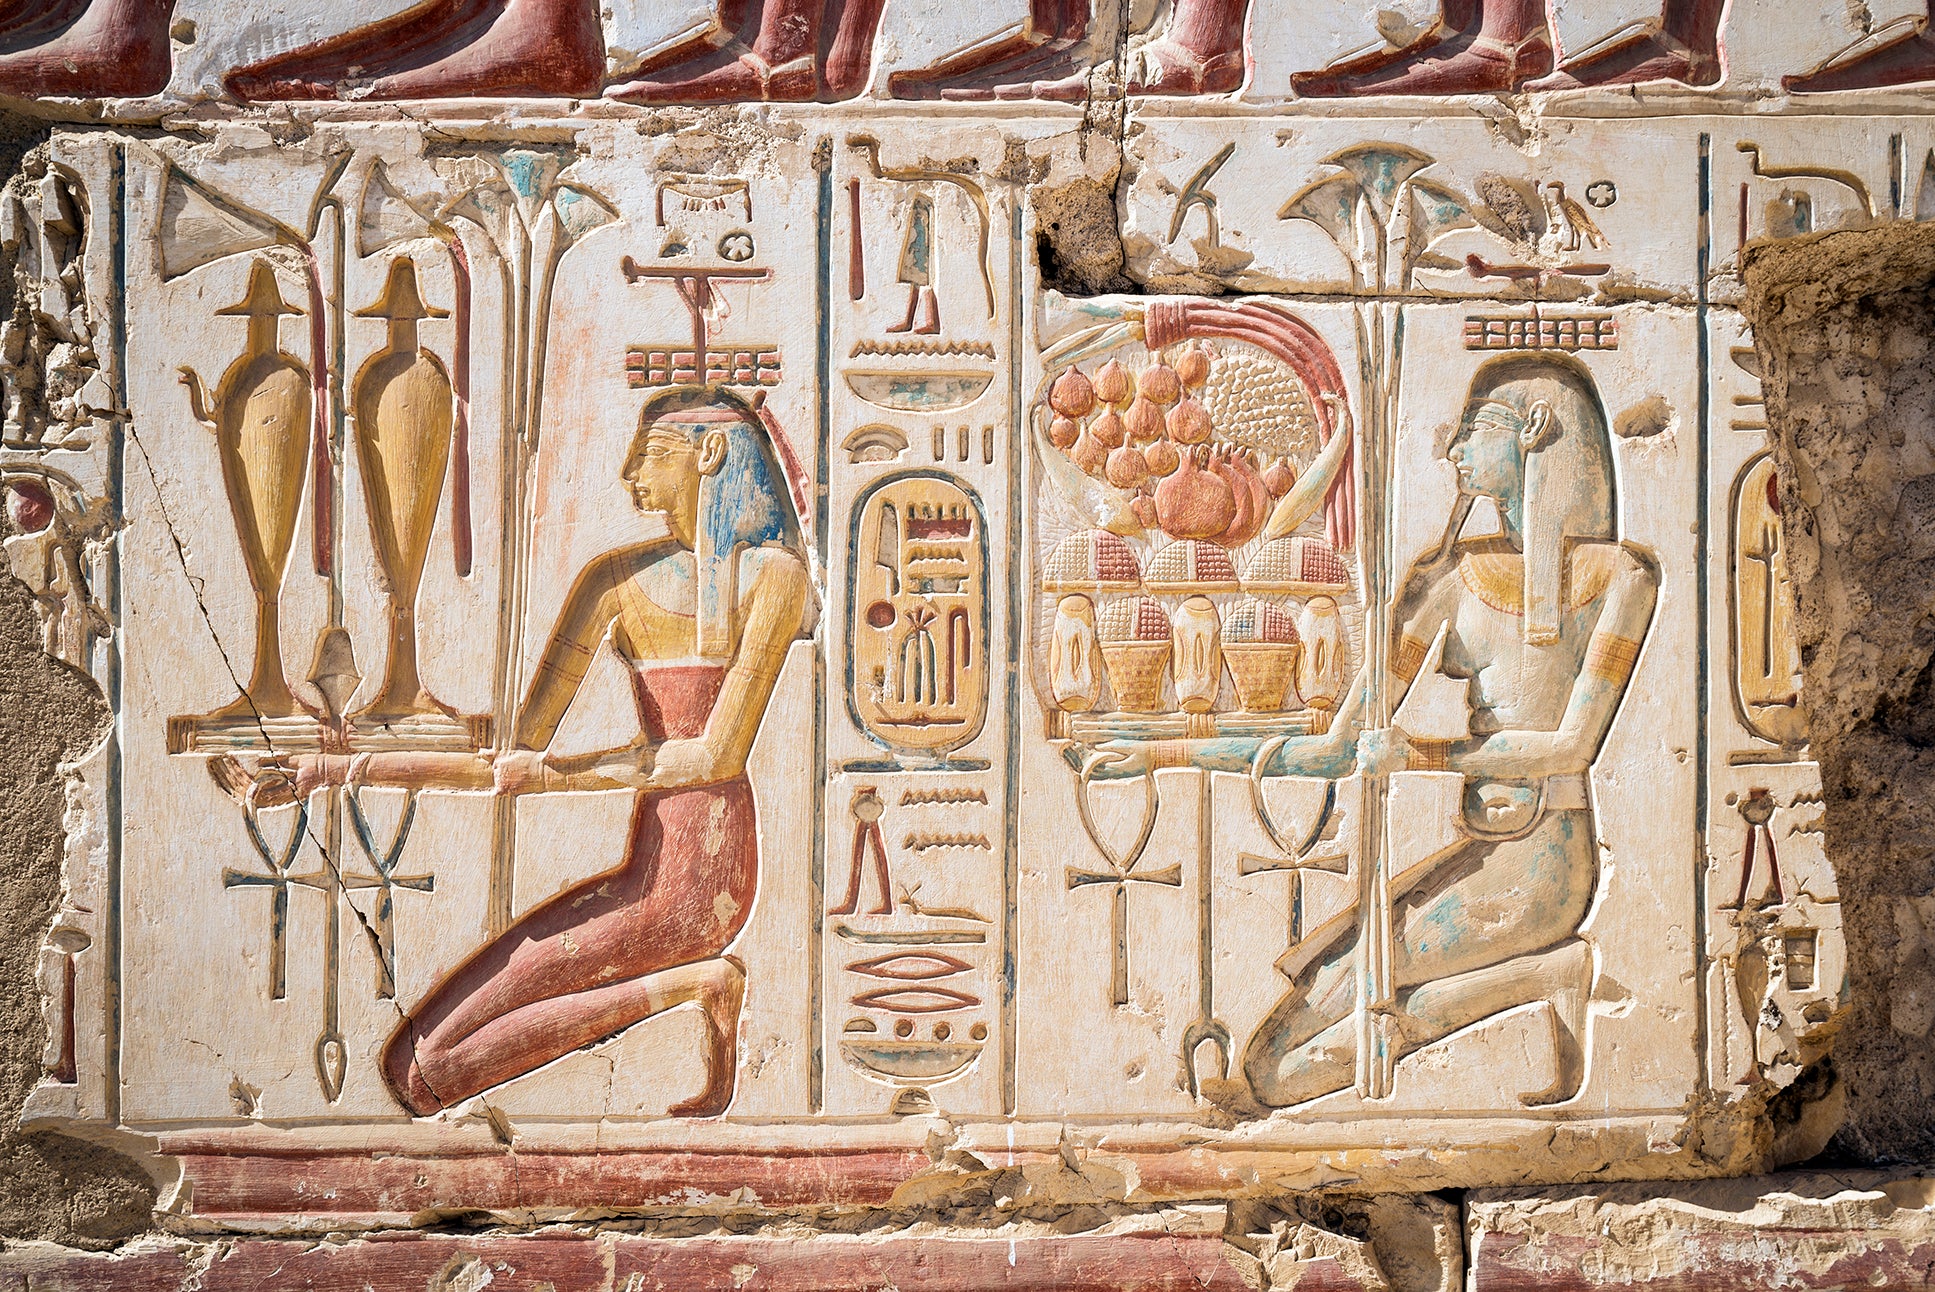 Sensoriam - the origins of natural perfume Ancient Egypt